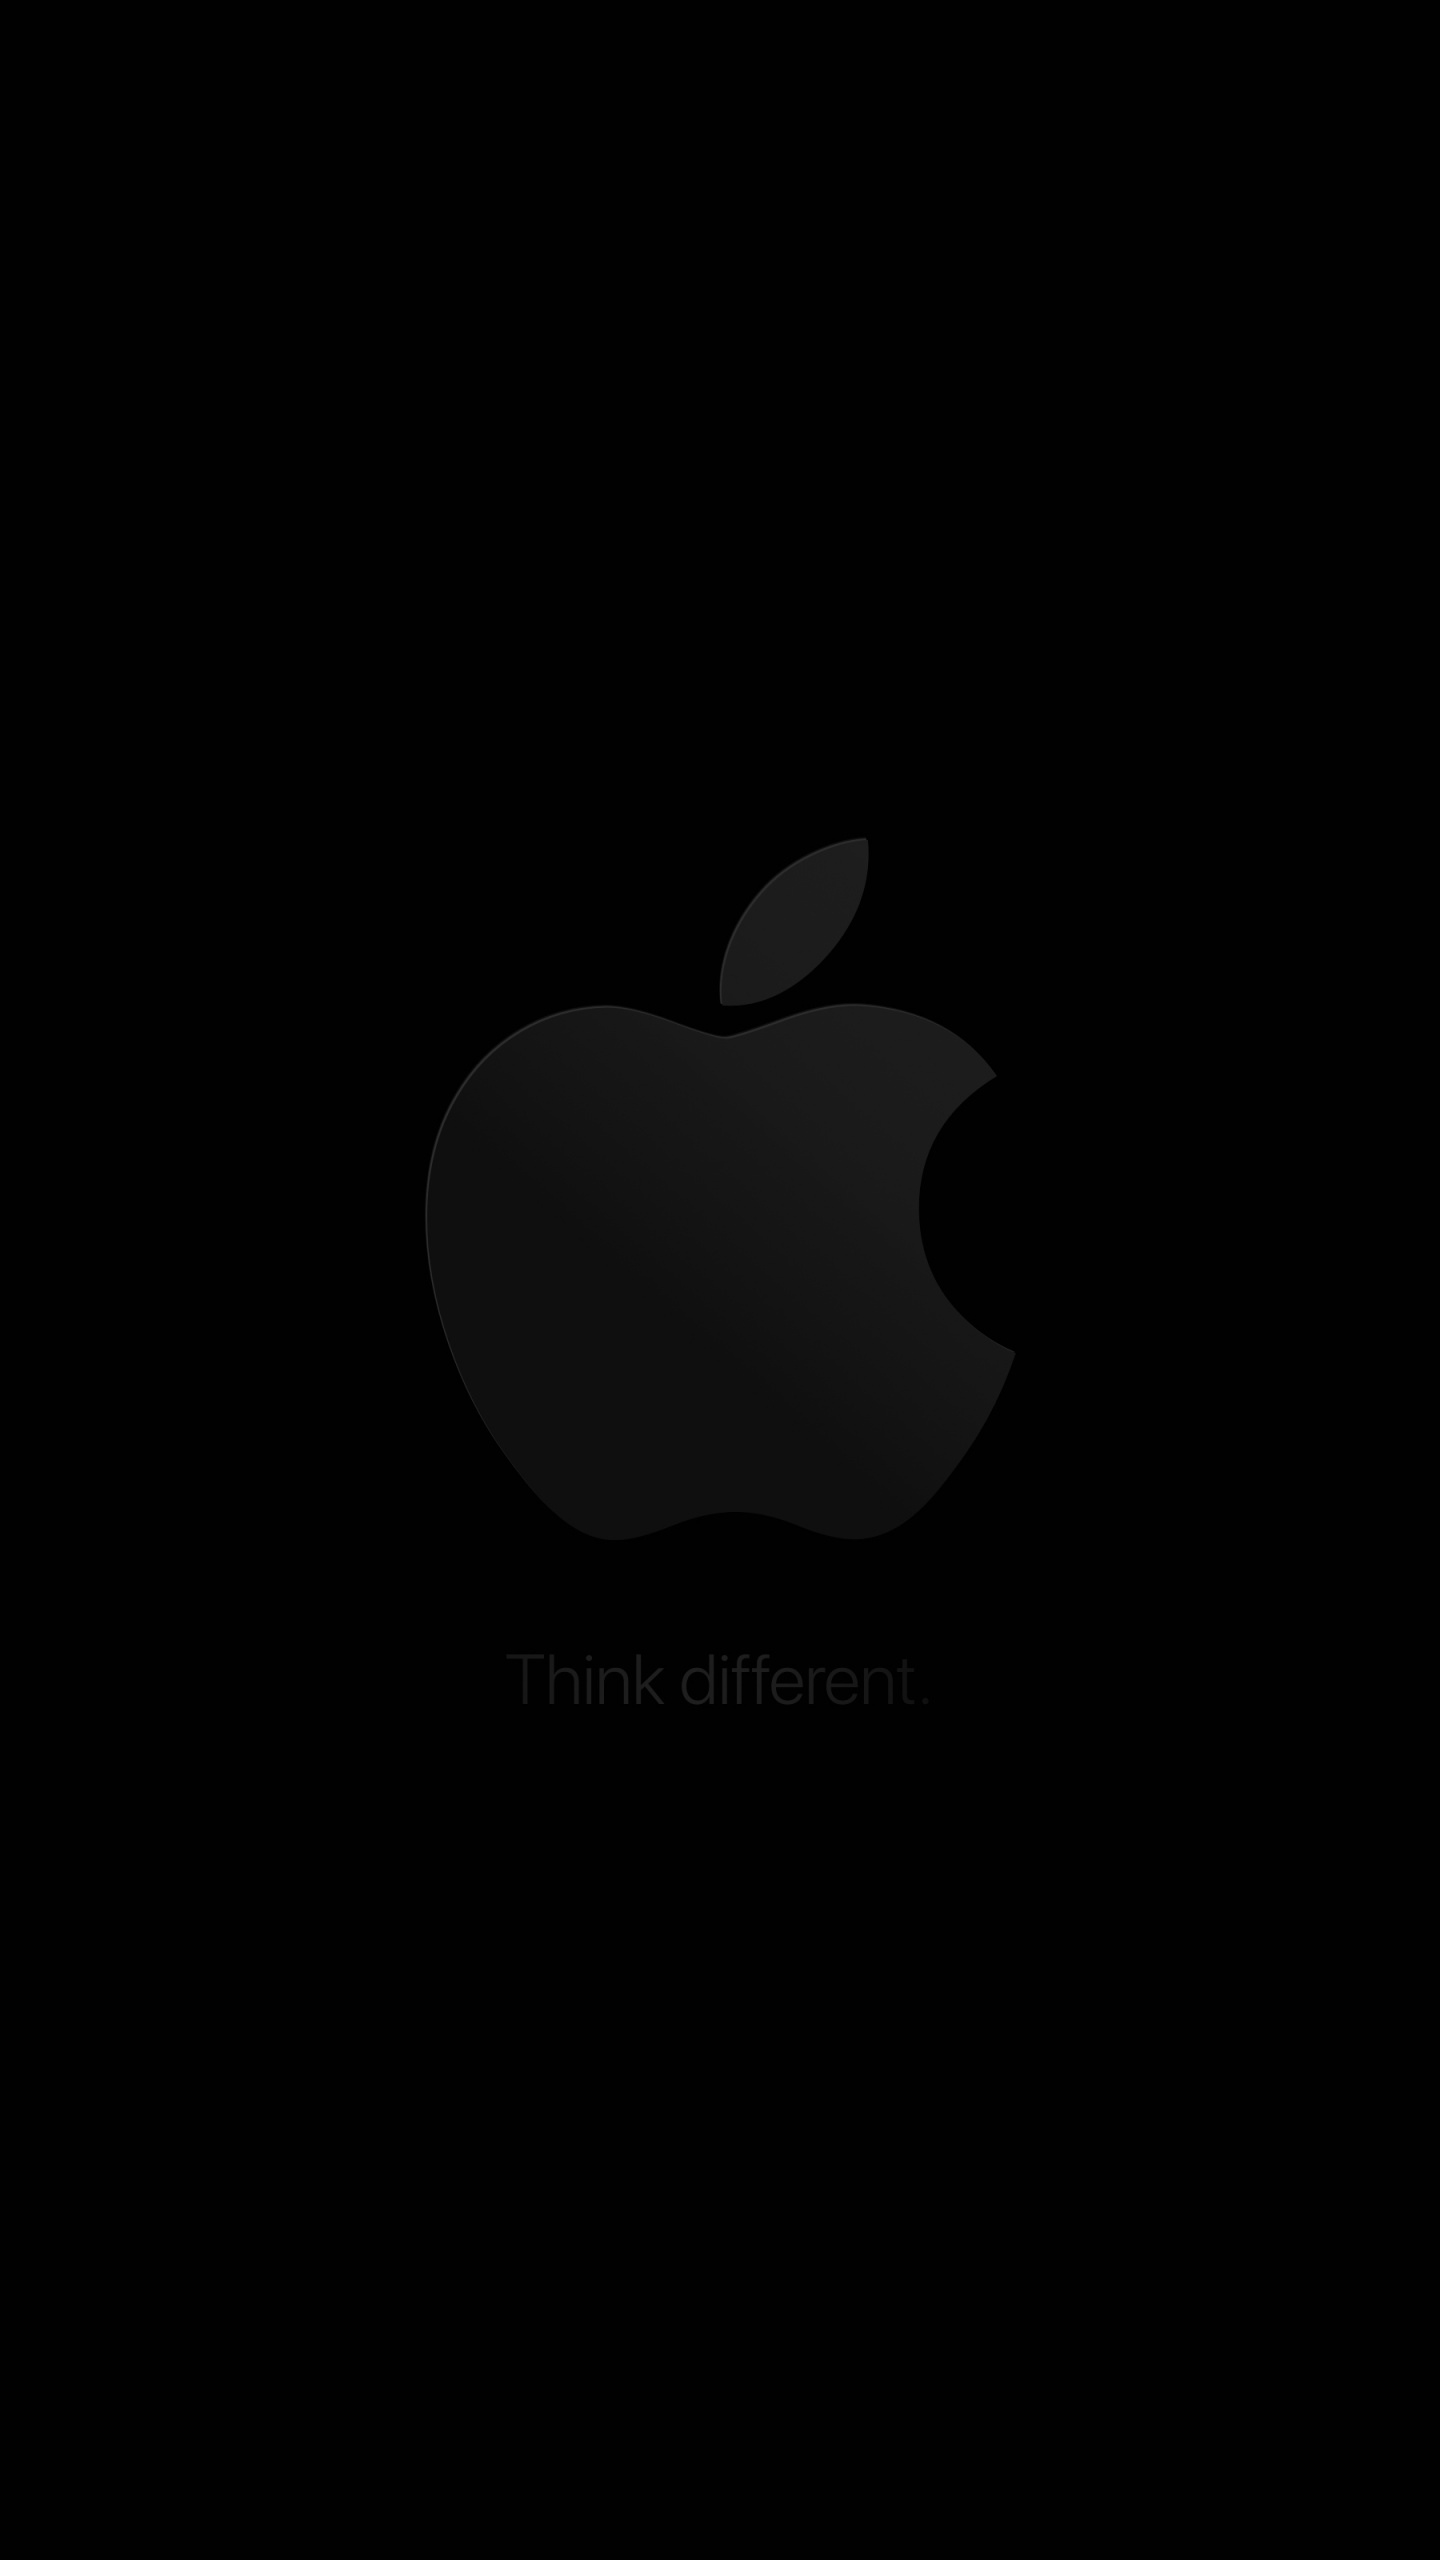 Apple logo Wallpaper 4K, Think different, Technology, #9999